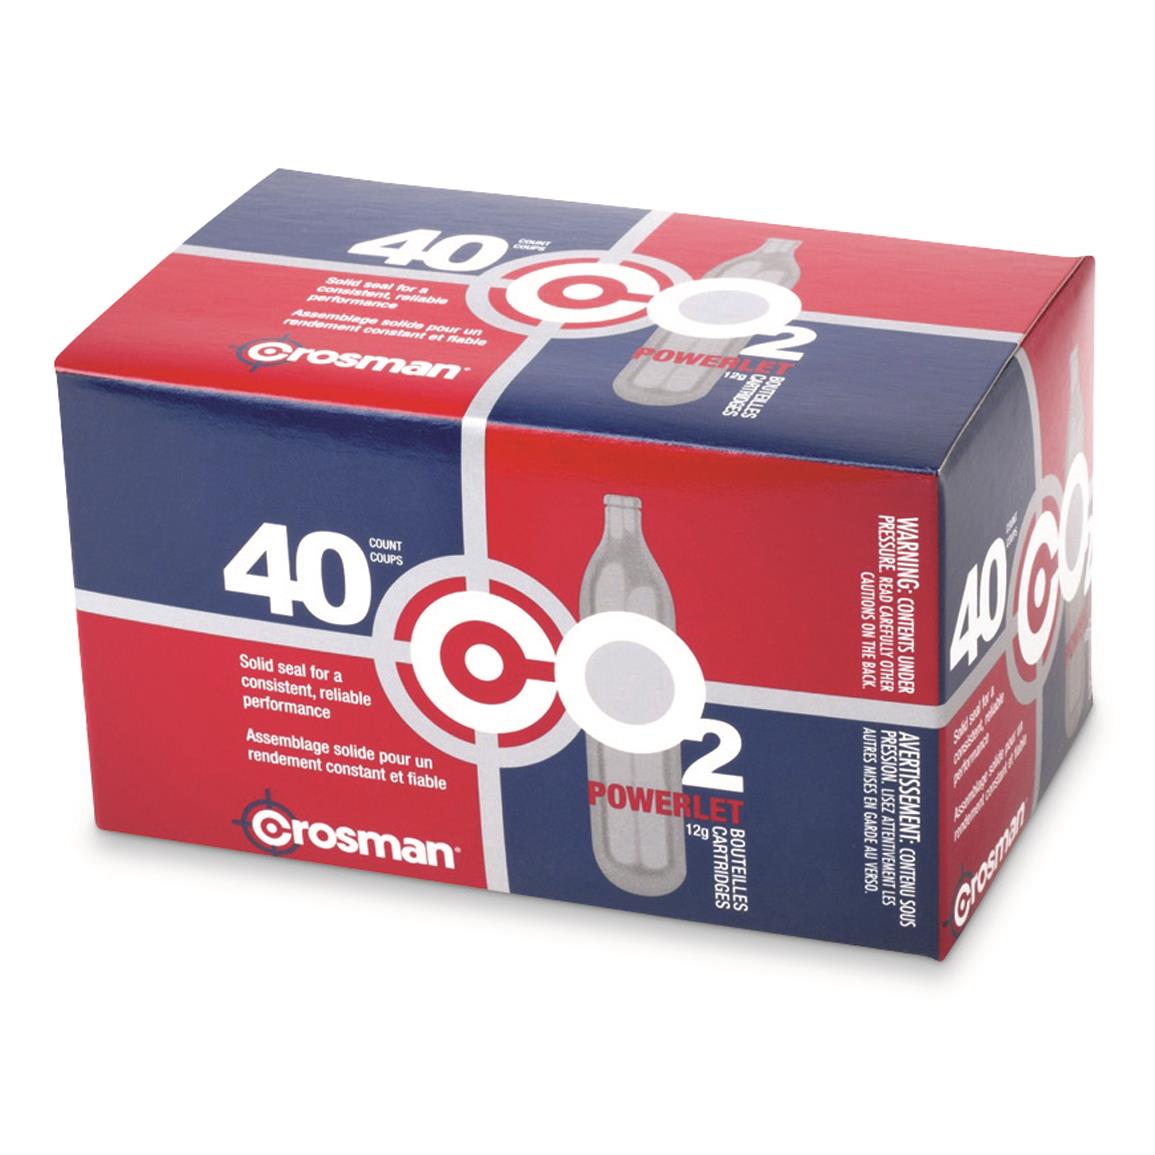 Crosman 12 Gram CO2 Cartridges Pack of 40 